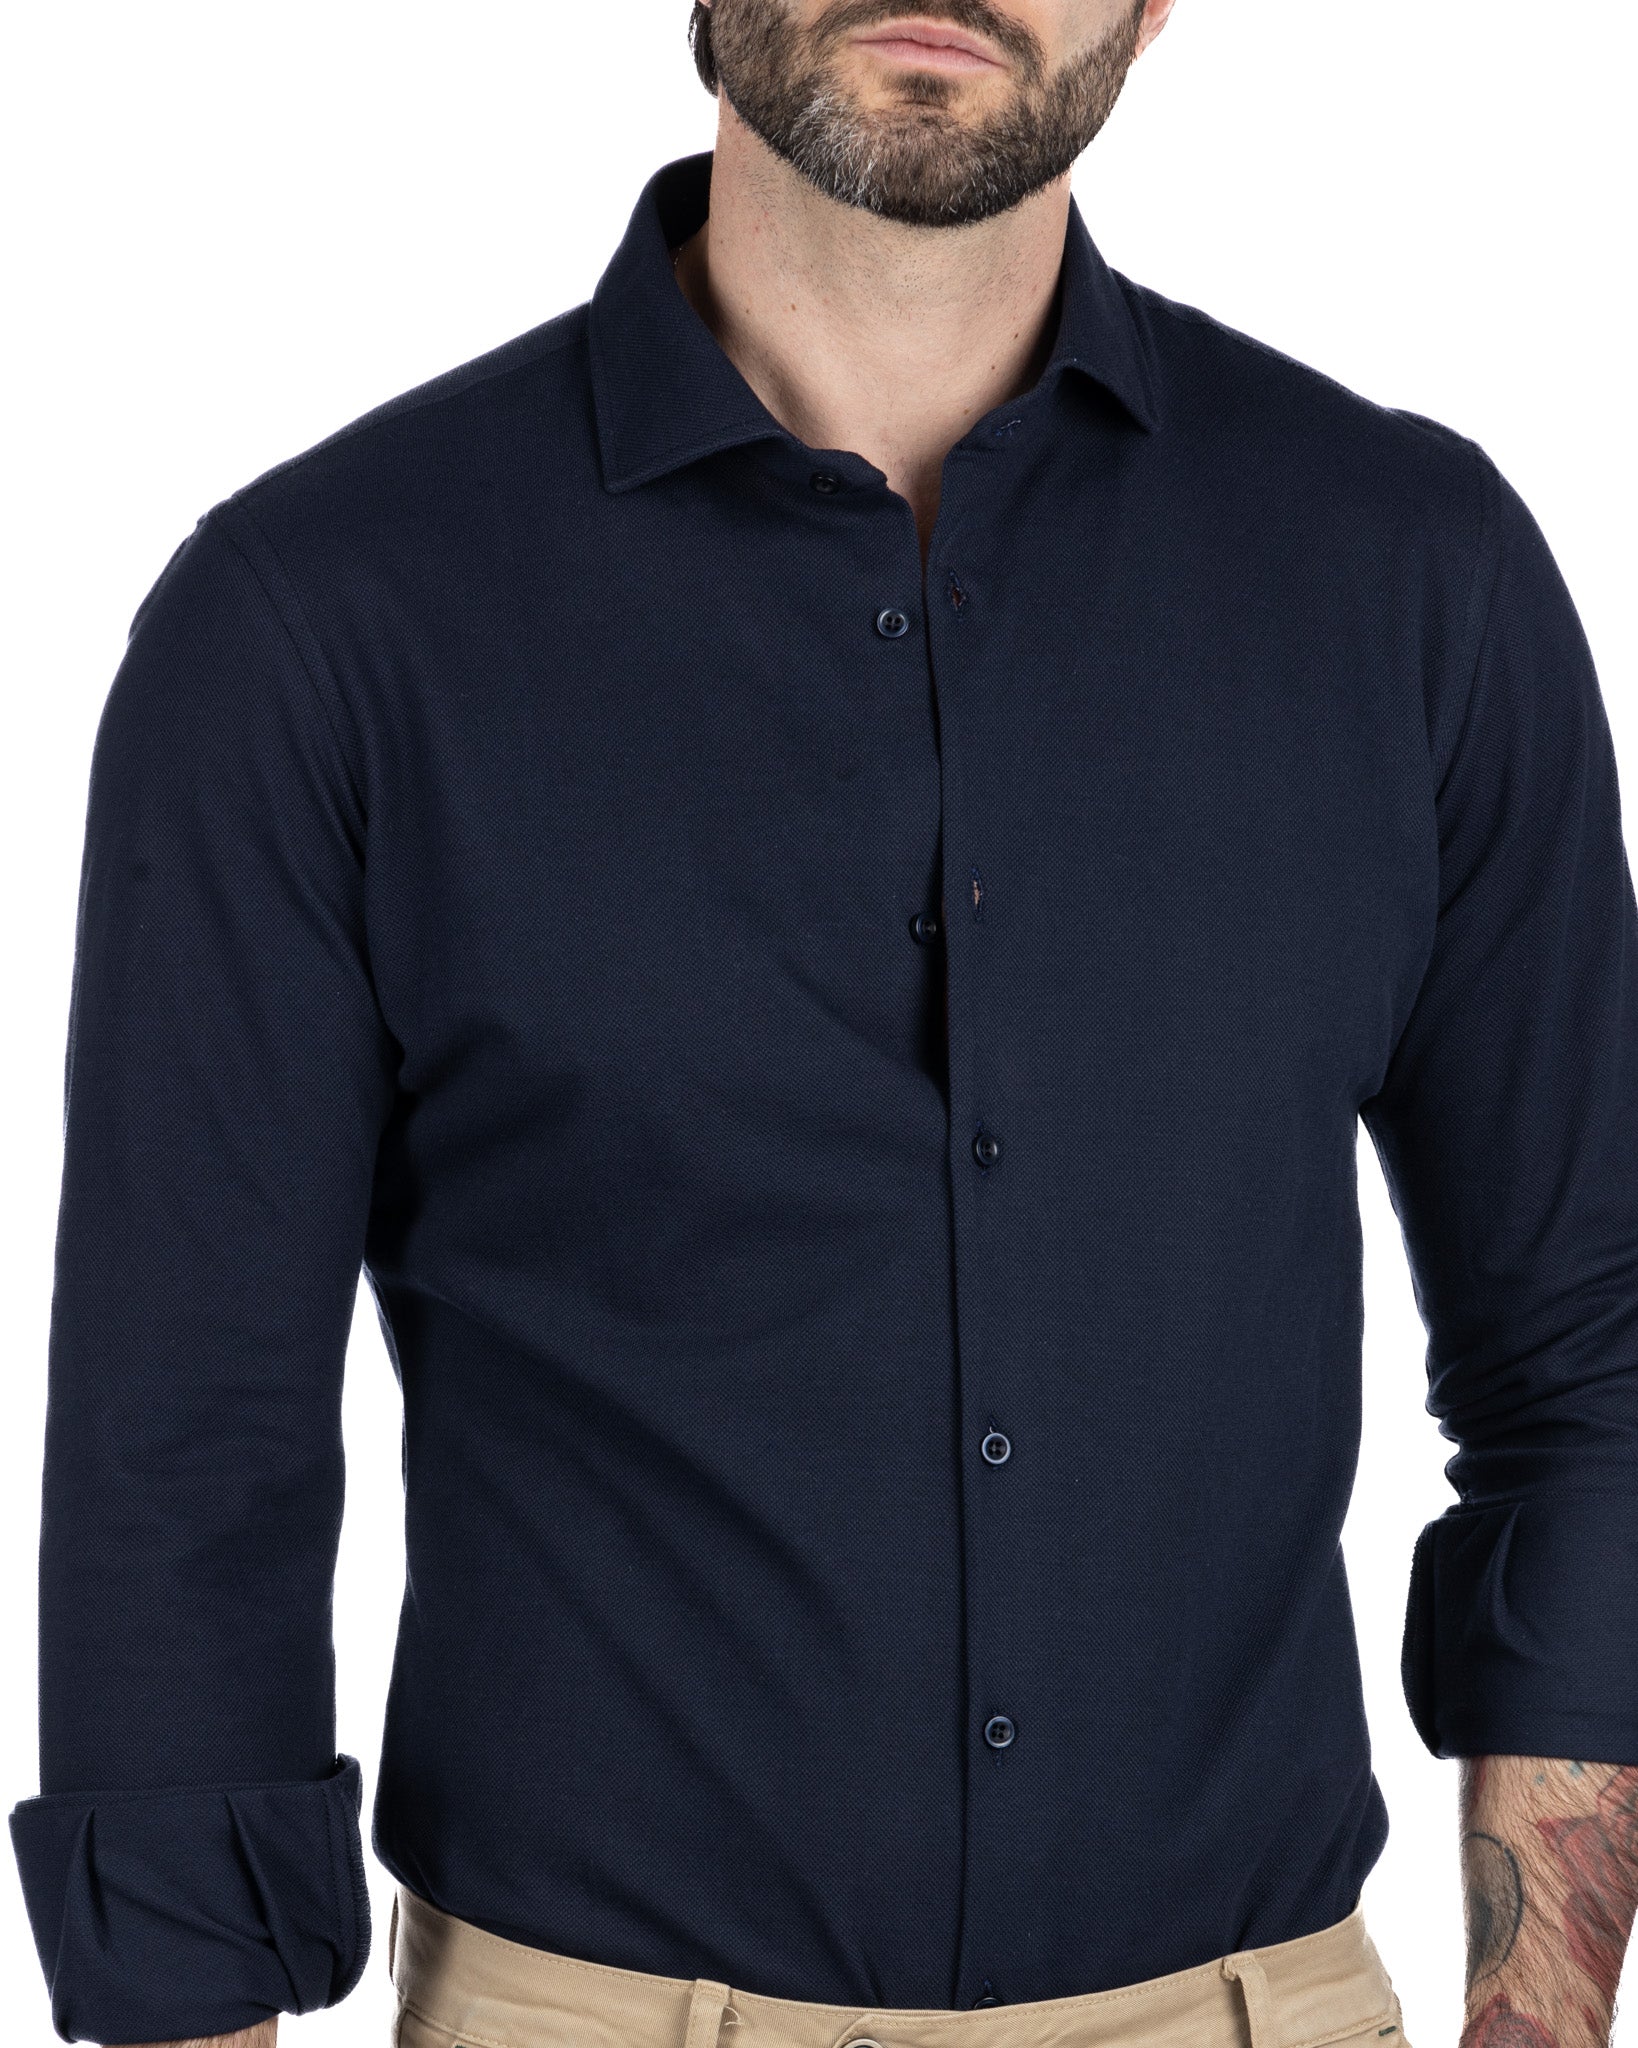 Shirt - slim fit navy blue jersey